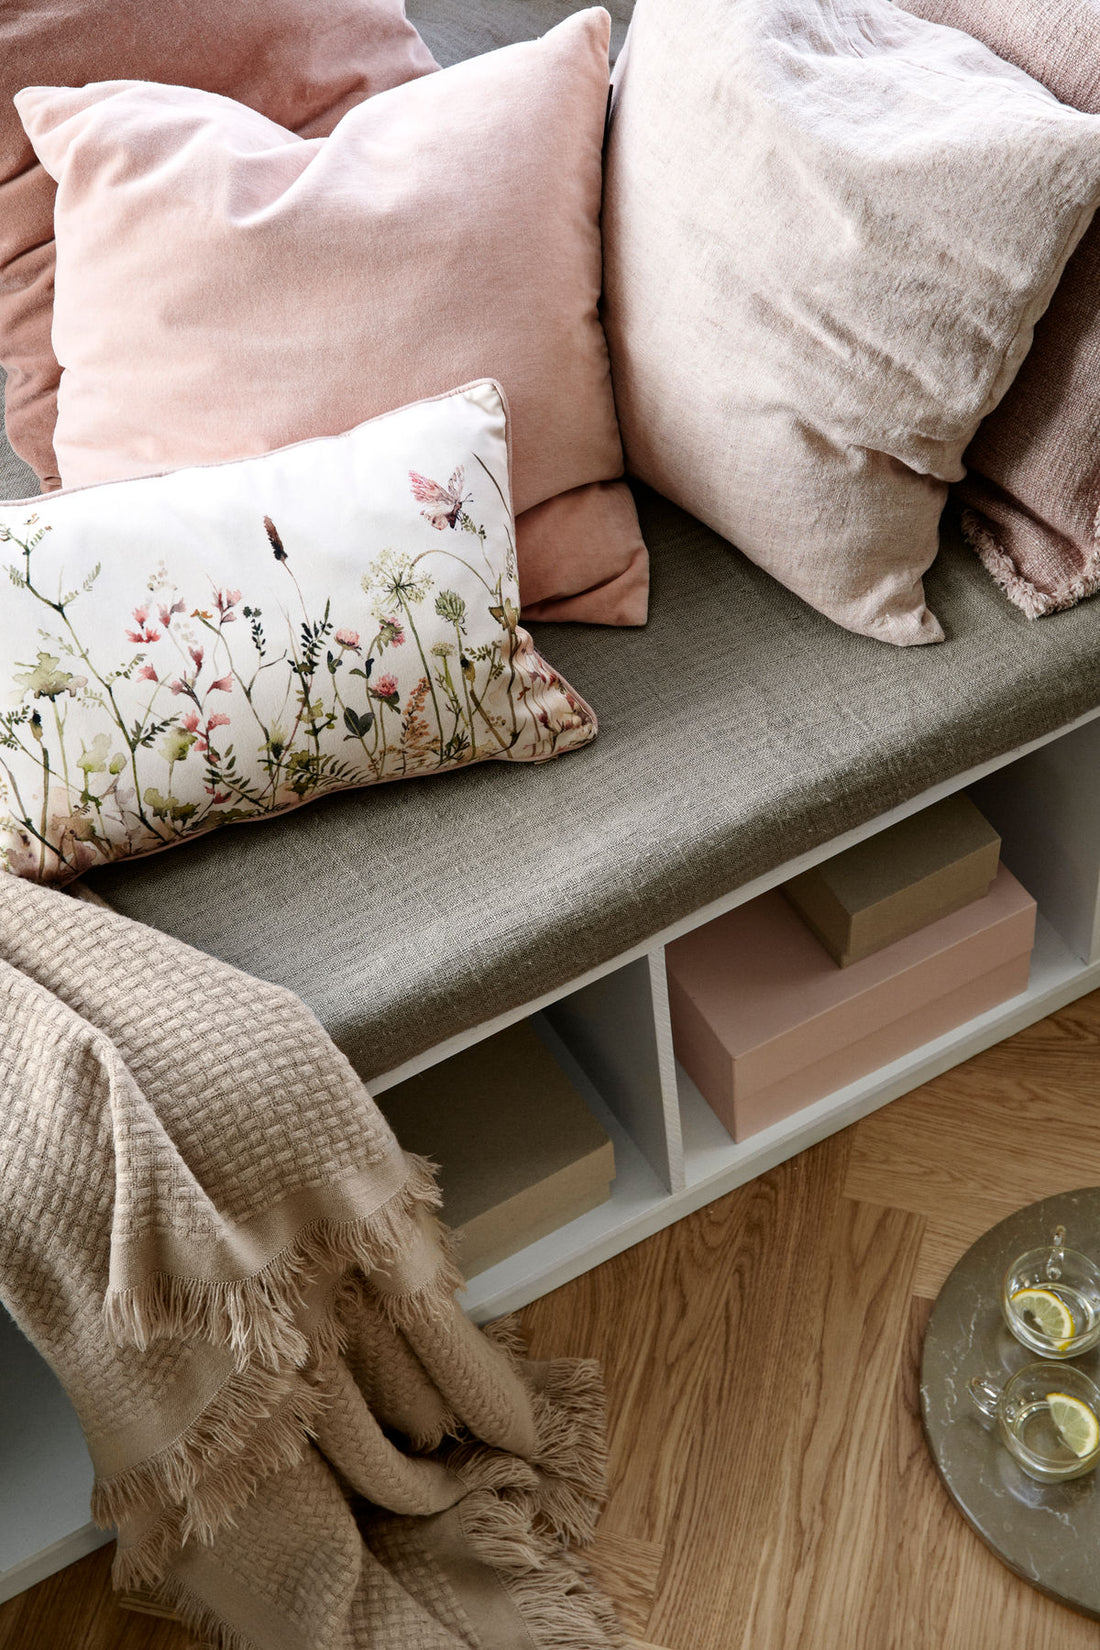 Cozy Living Luxury Light Linen Cushion Cover - Antique Rose